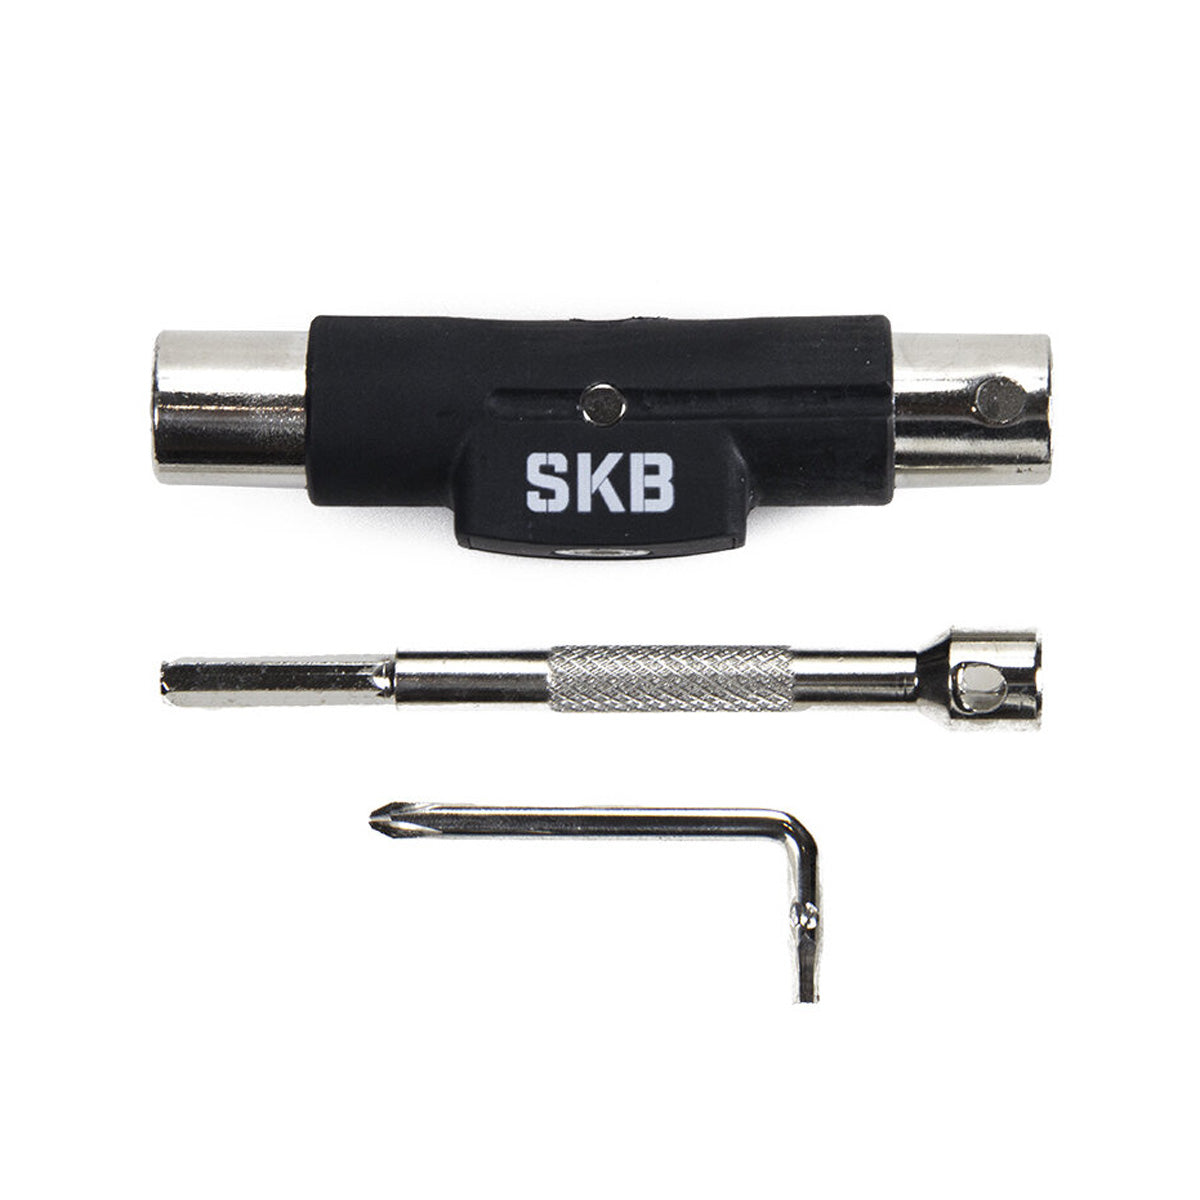 SKB Technic Tool silver